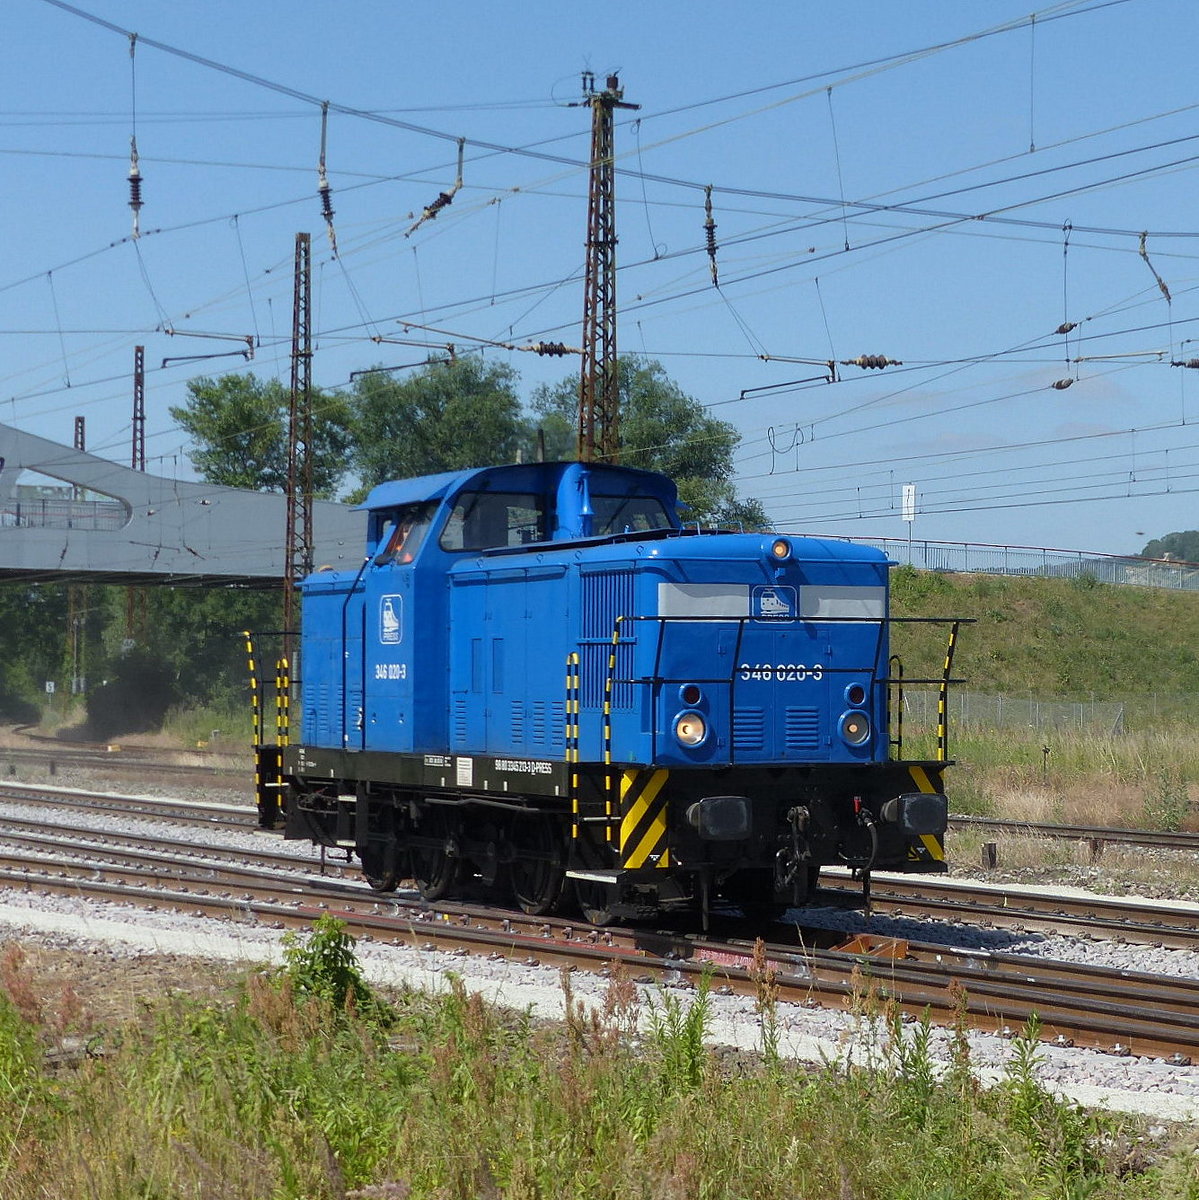 PRESS 346 020-3 (98 80 3345 213-3 D-PRESS) als Tfzf Richtung Großkorbetha, am 28.06.2019 in Naumburg (S) Hbf.